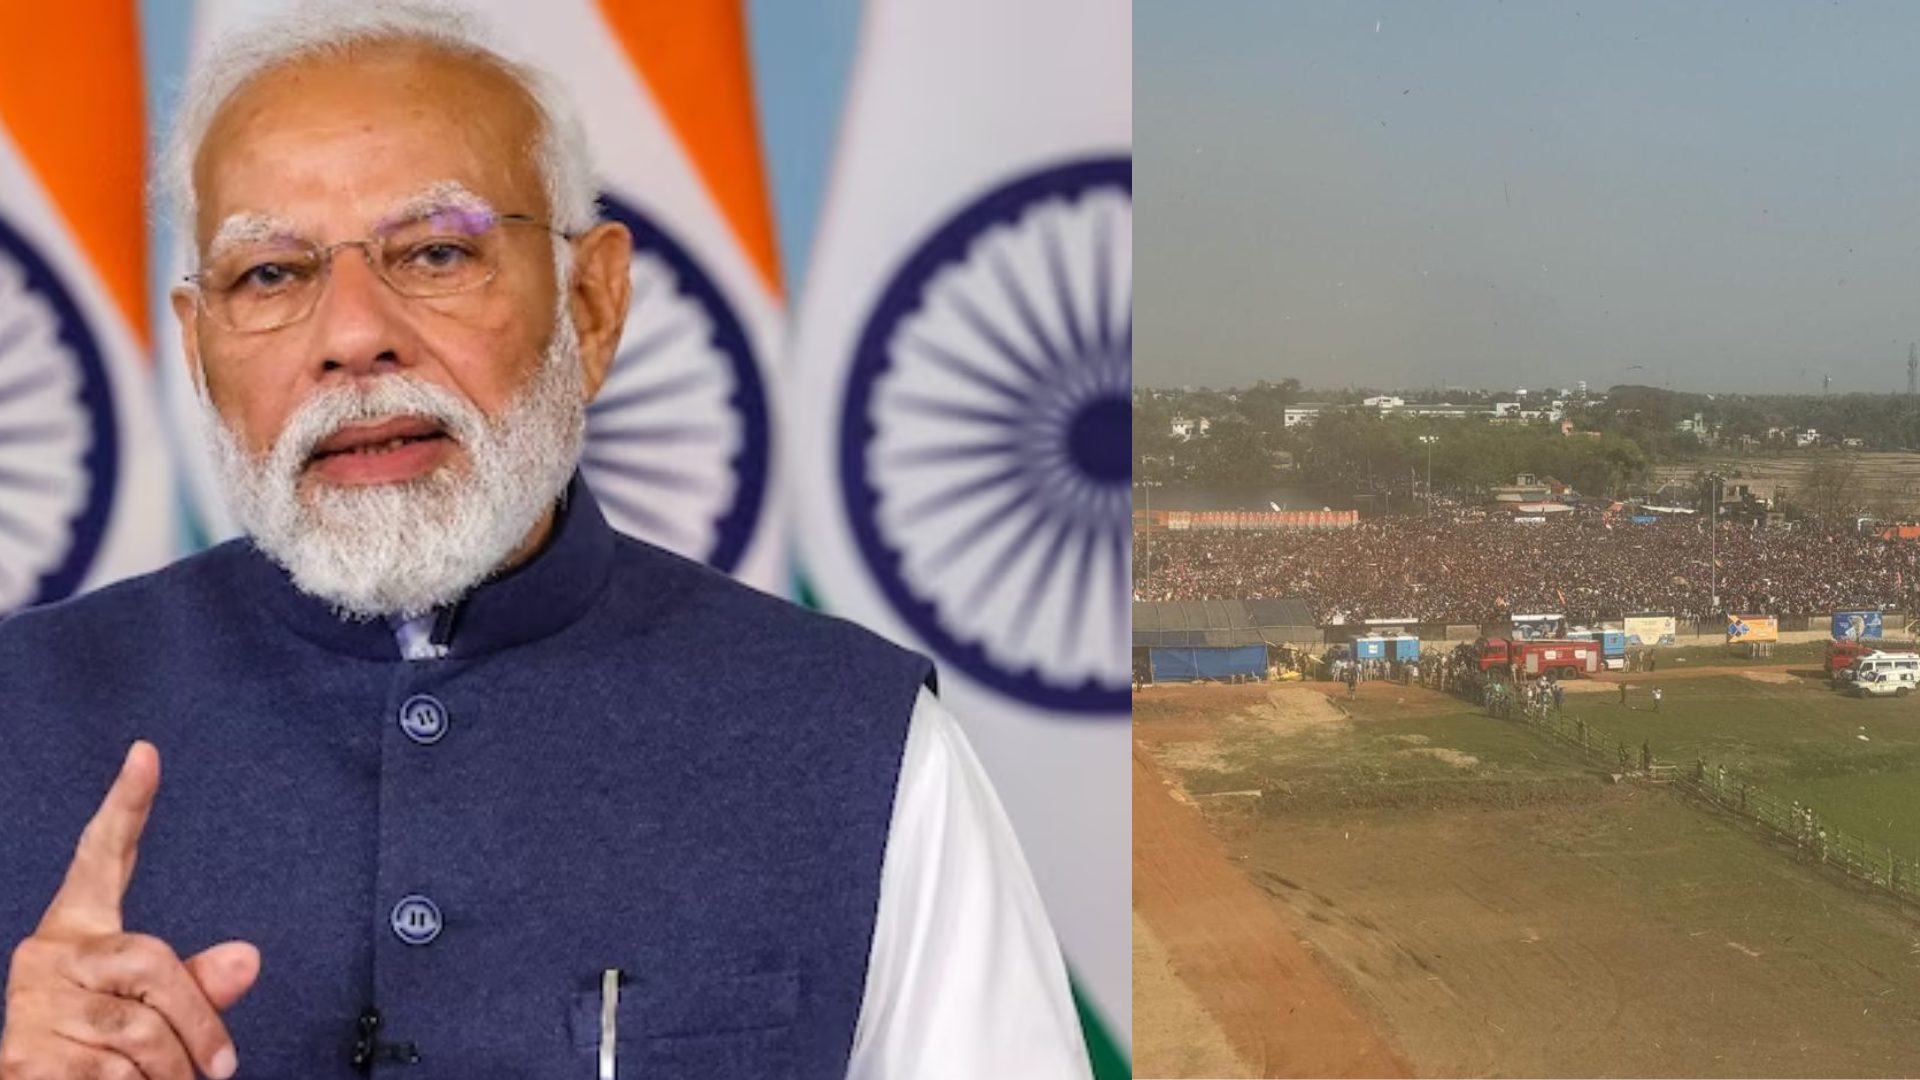 Massive Turnout as PM Modi Unveils ₹17,600 Crore Developmental Projects in Jharkhand’s Sindri